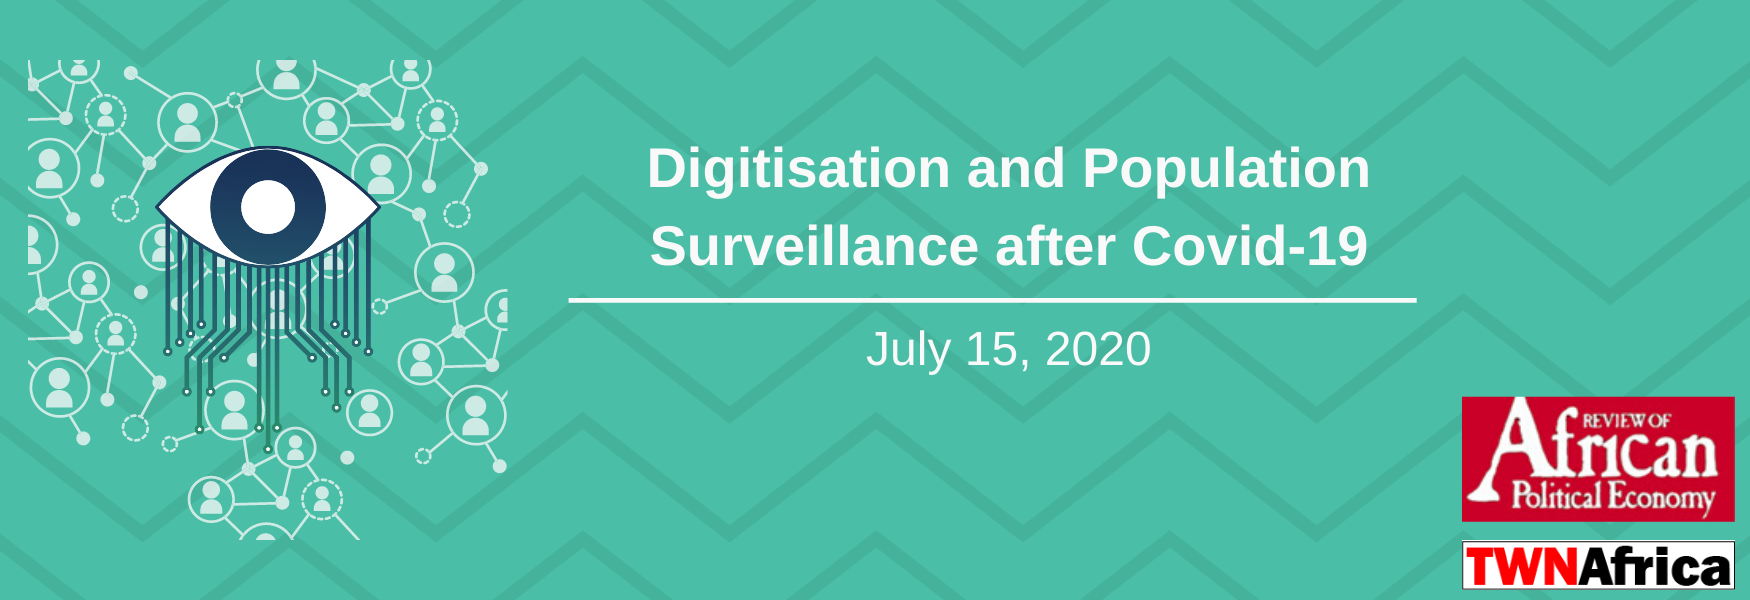 Digitisation and Population Surveillance after Covid-19